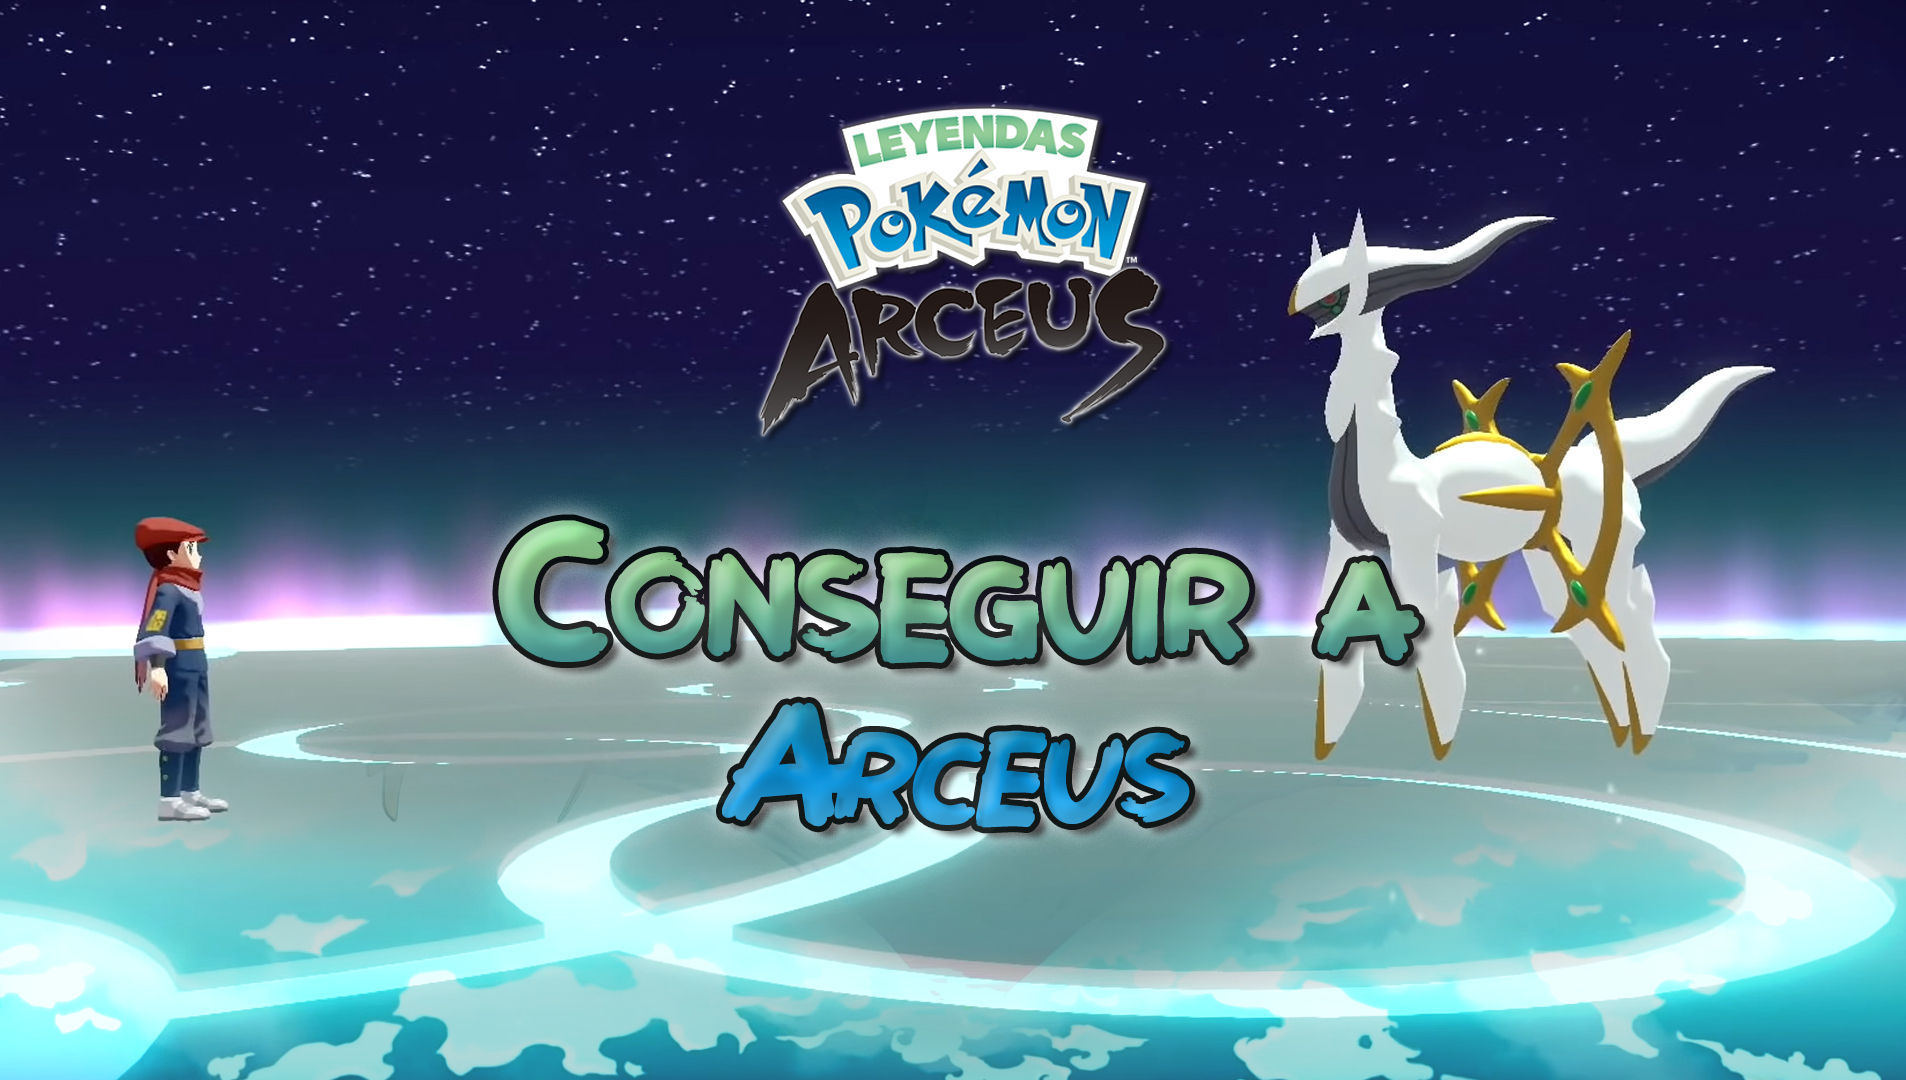 Cómo evolucionar a los pokémon de leyendas Arceus 2022 en Pokémon GO